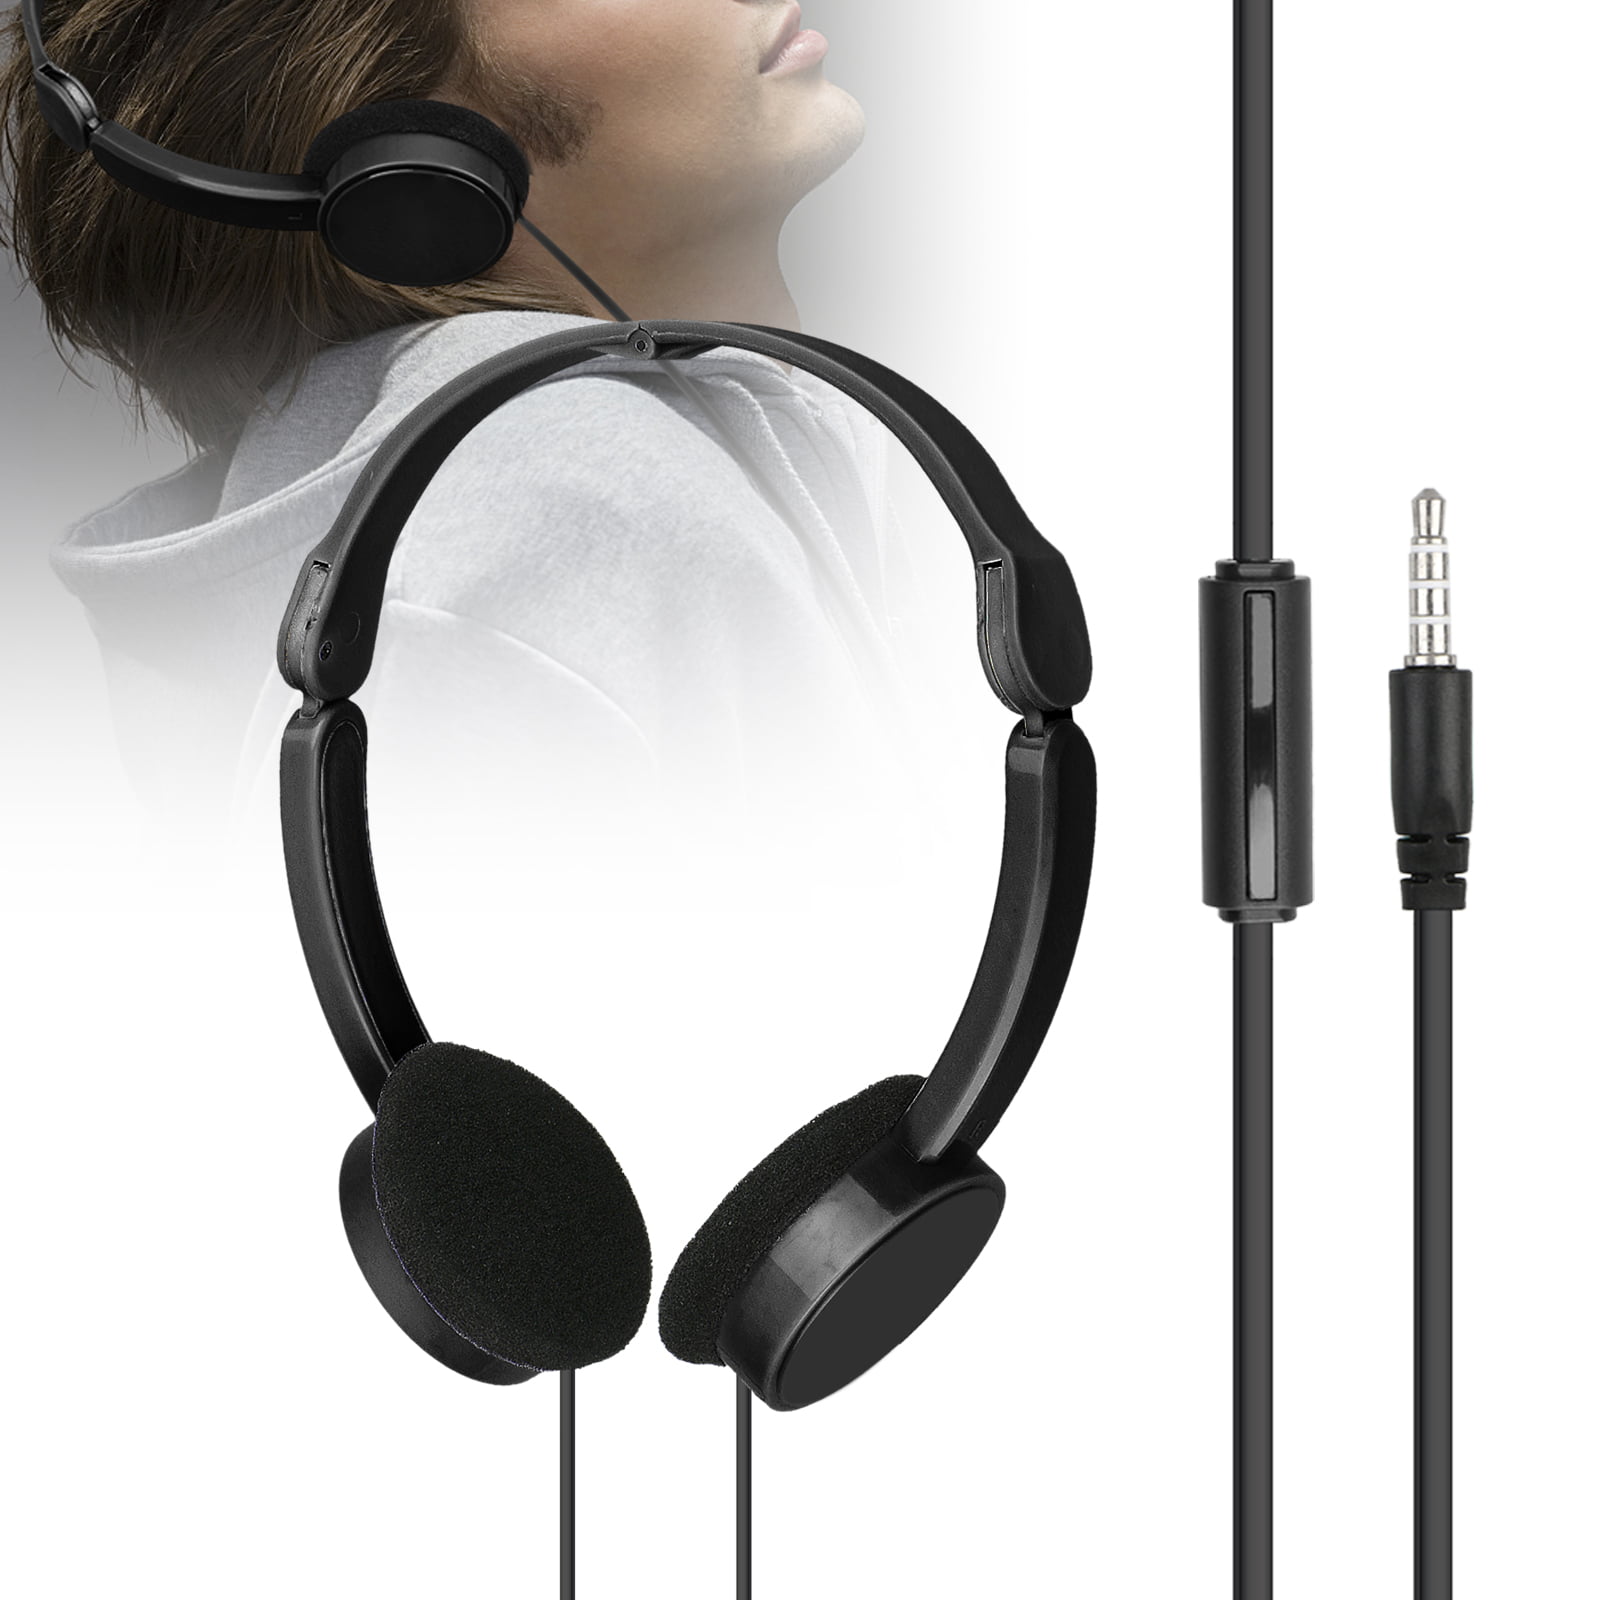 3.5mm Plug Retractable Foldable Stereo Bass Earphone Headphones Headset Adjustable Headband with Mic for Smart Phones, Tablets, Laptop